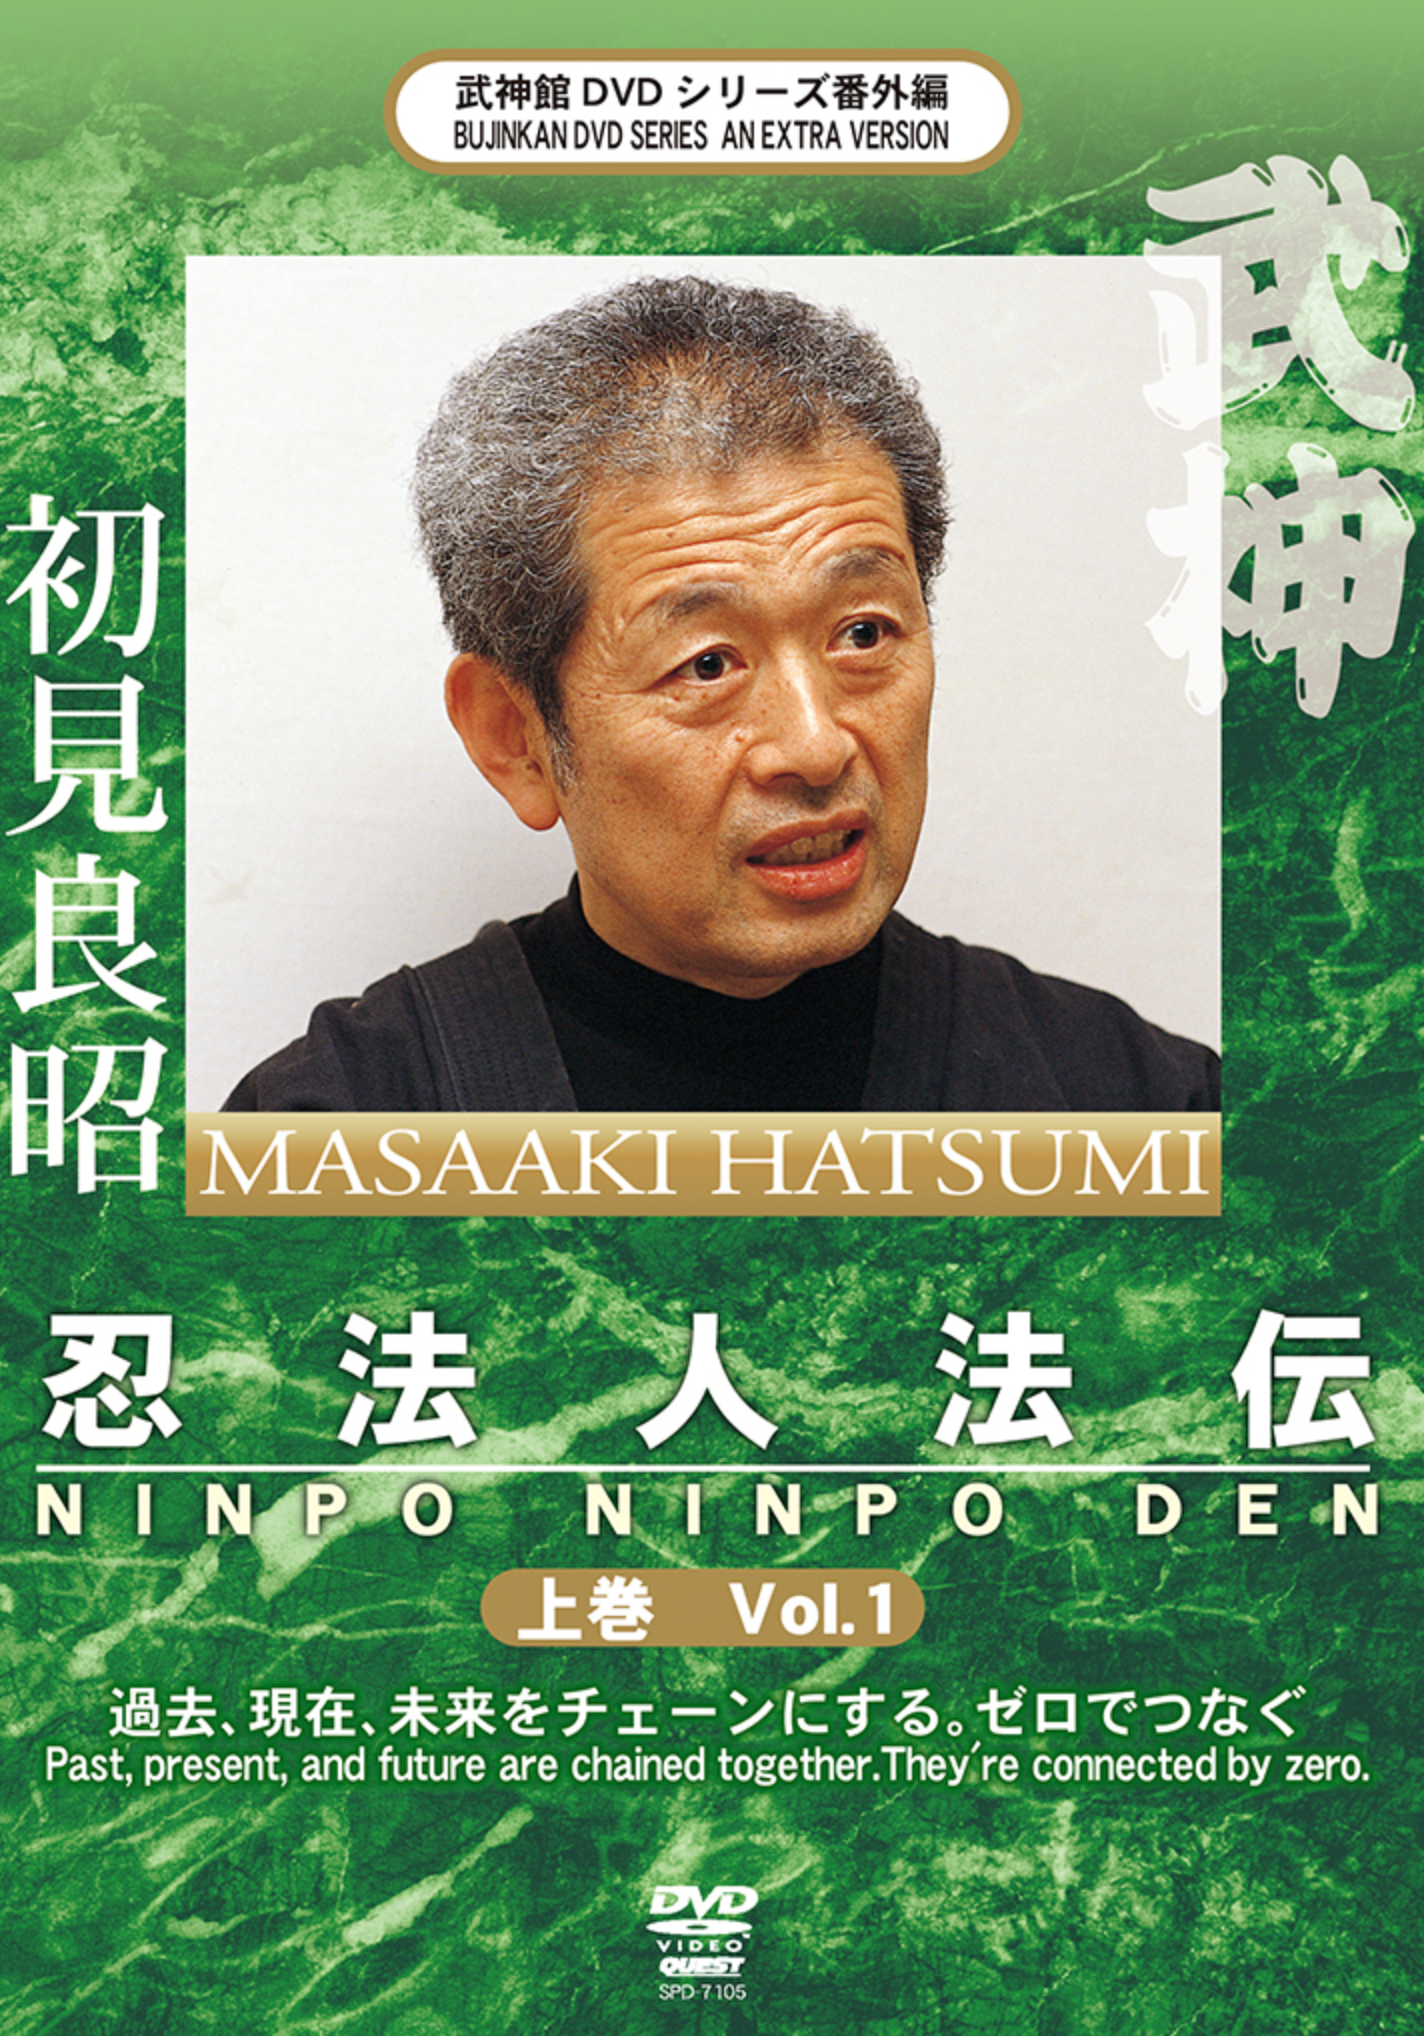 Ninpo Ninpo Den Vol 1 DVD with Masaaki Hatsumi - Budovideos Inc